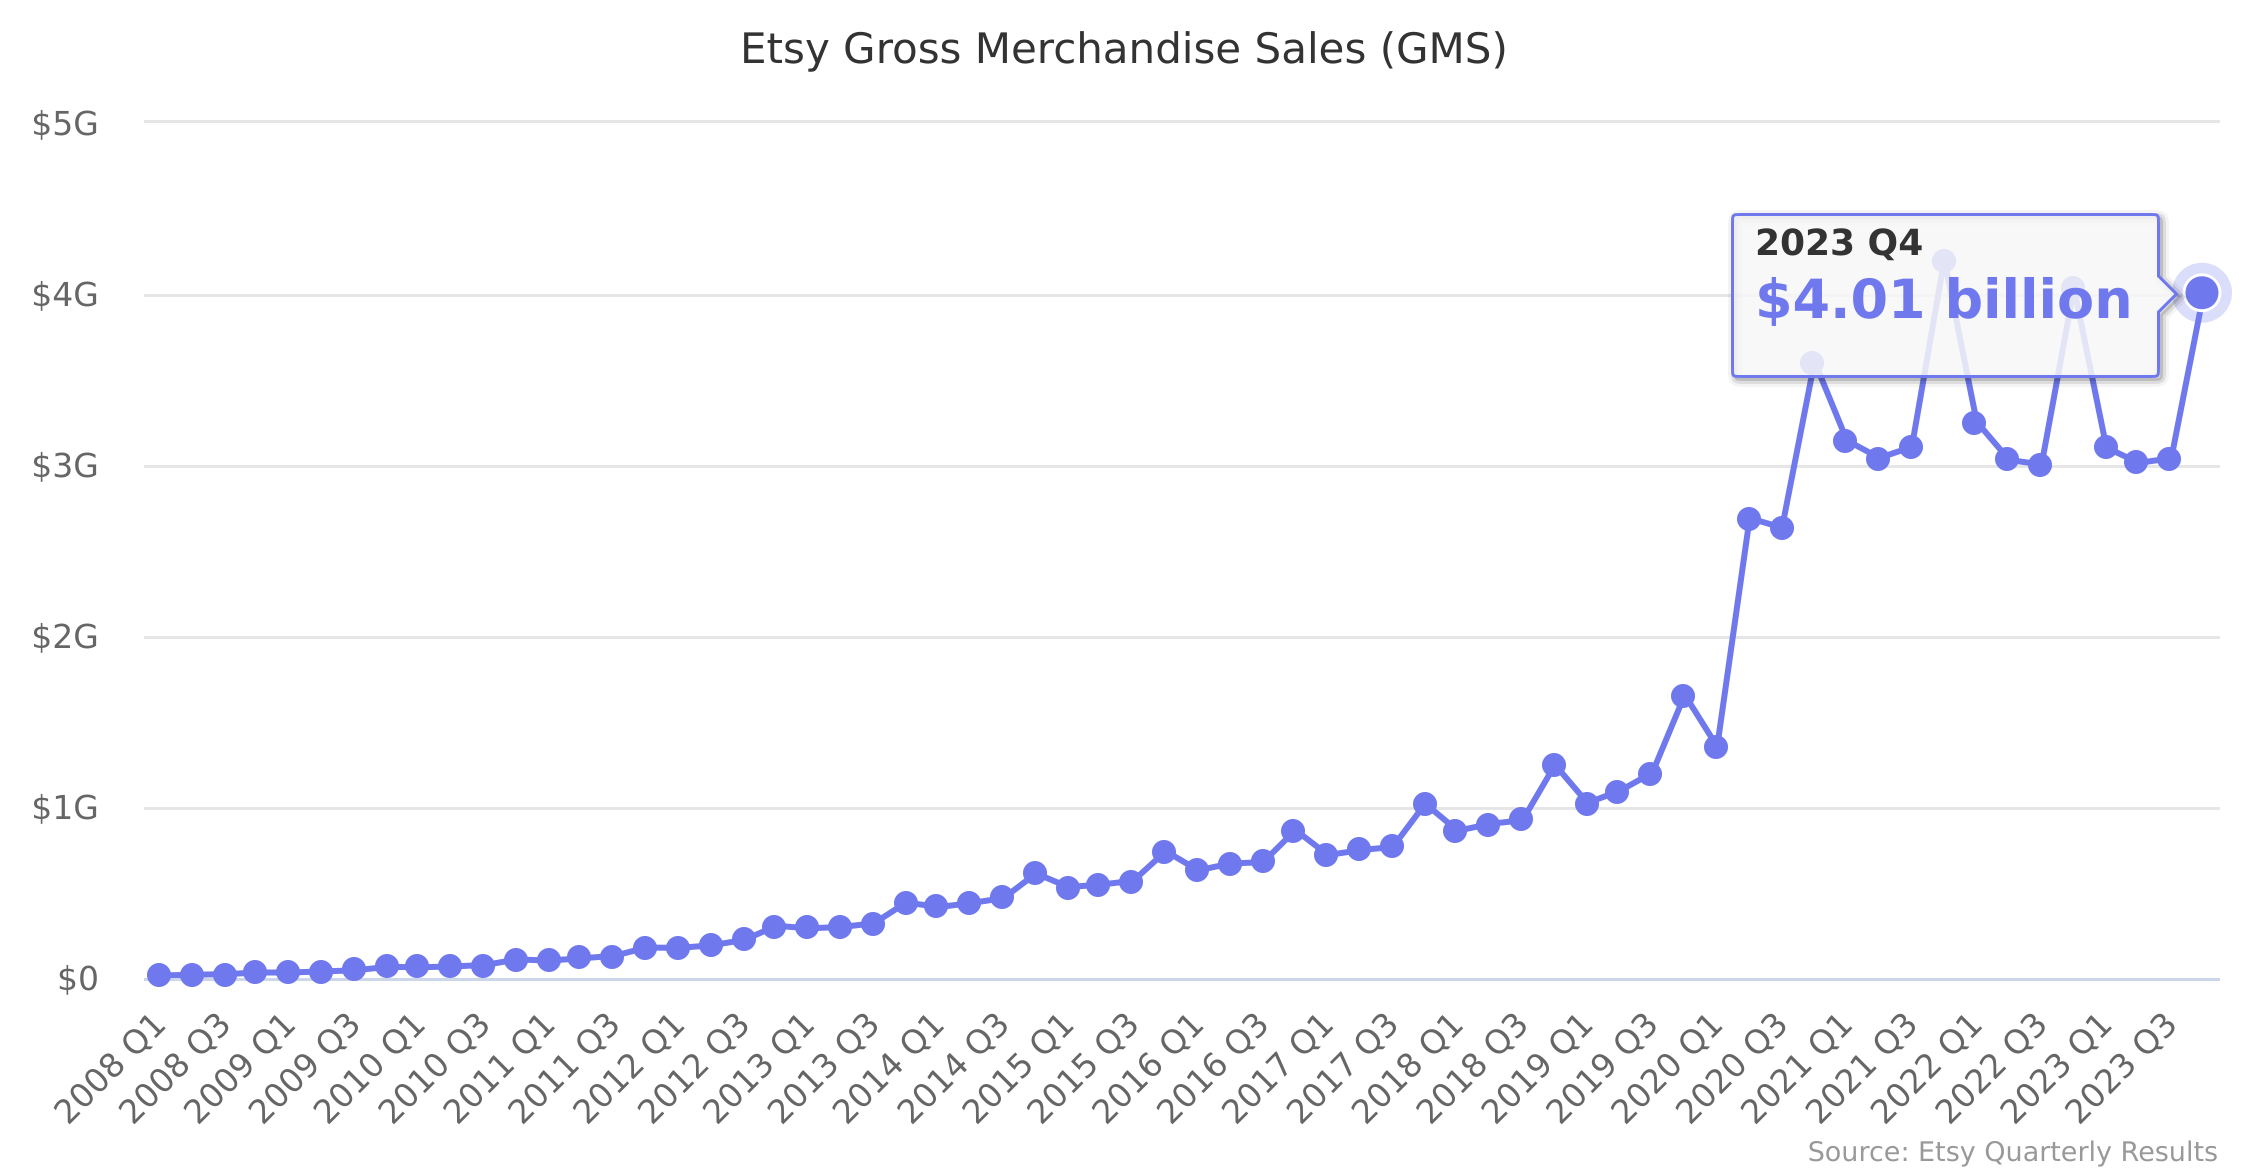 Etsy Gross Merchandise Sales (GMS) 2008-2022